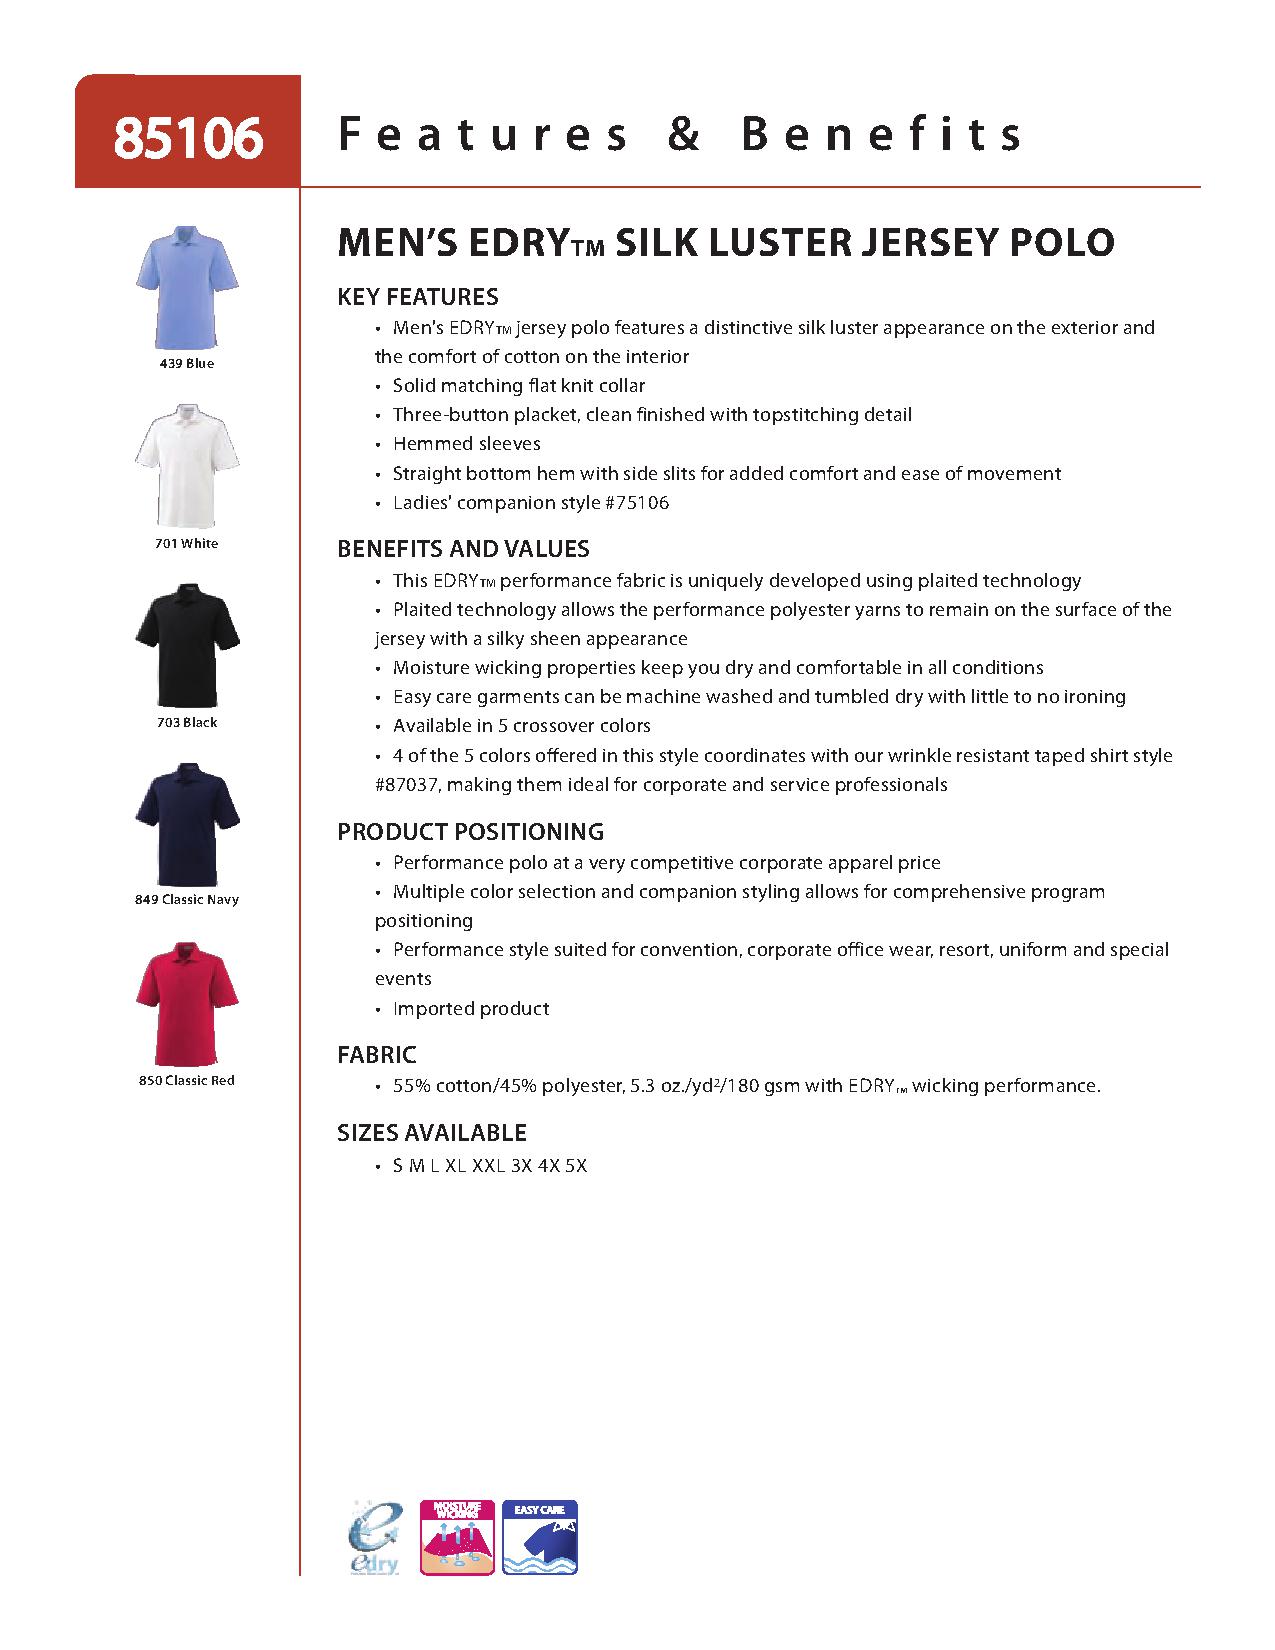 Ash City Jersey 85106 - Luster Men's Edry Silk Luster Jersey Polo